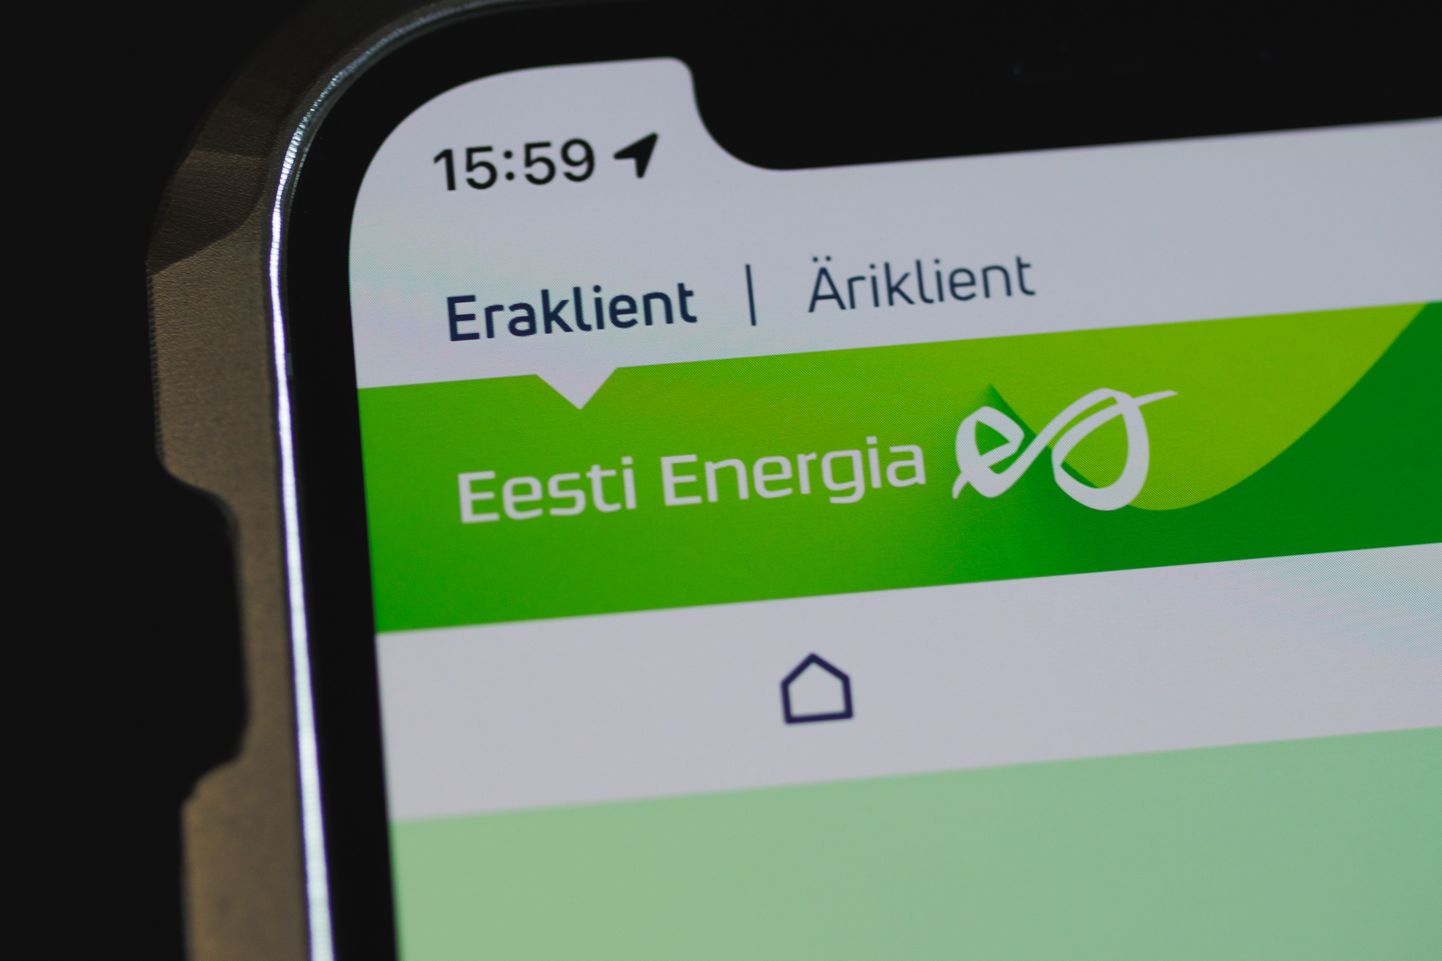 Eesti Energia